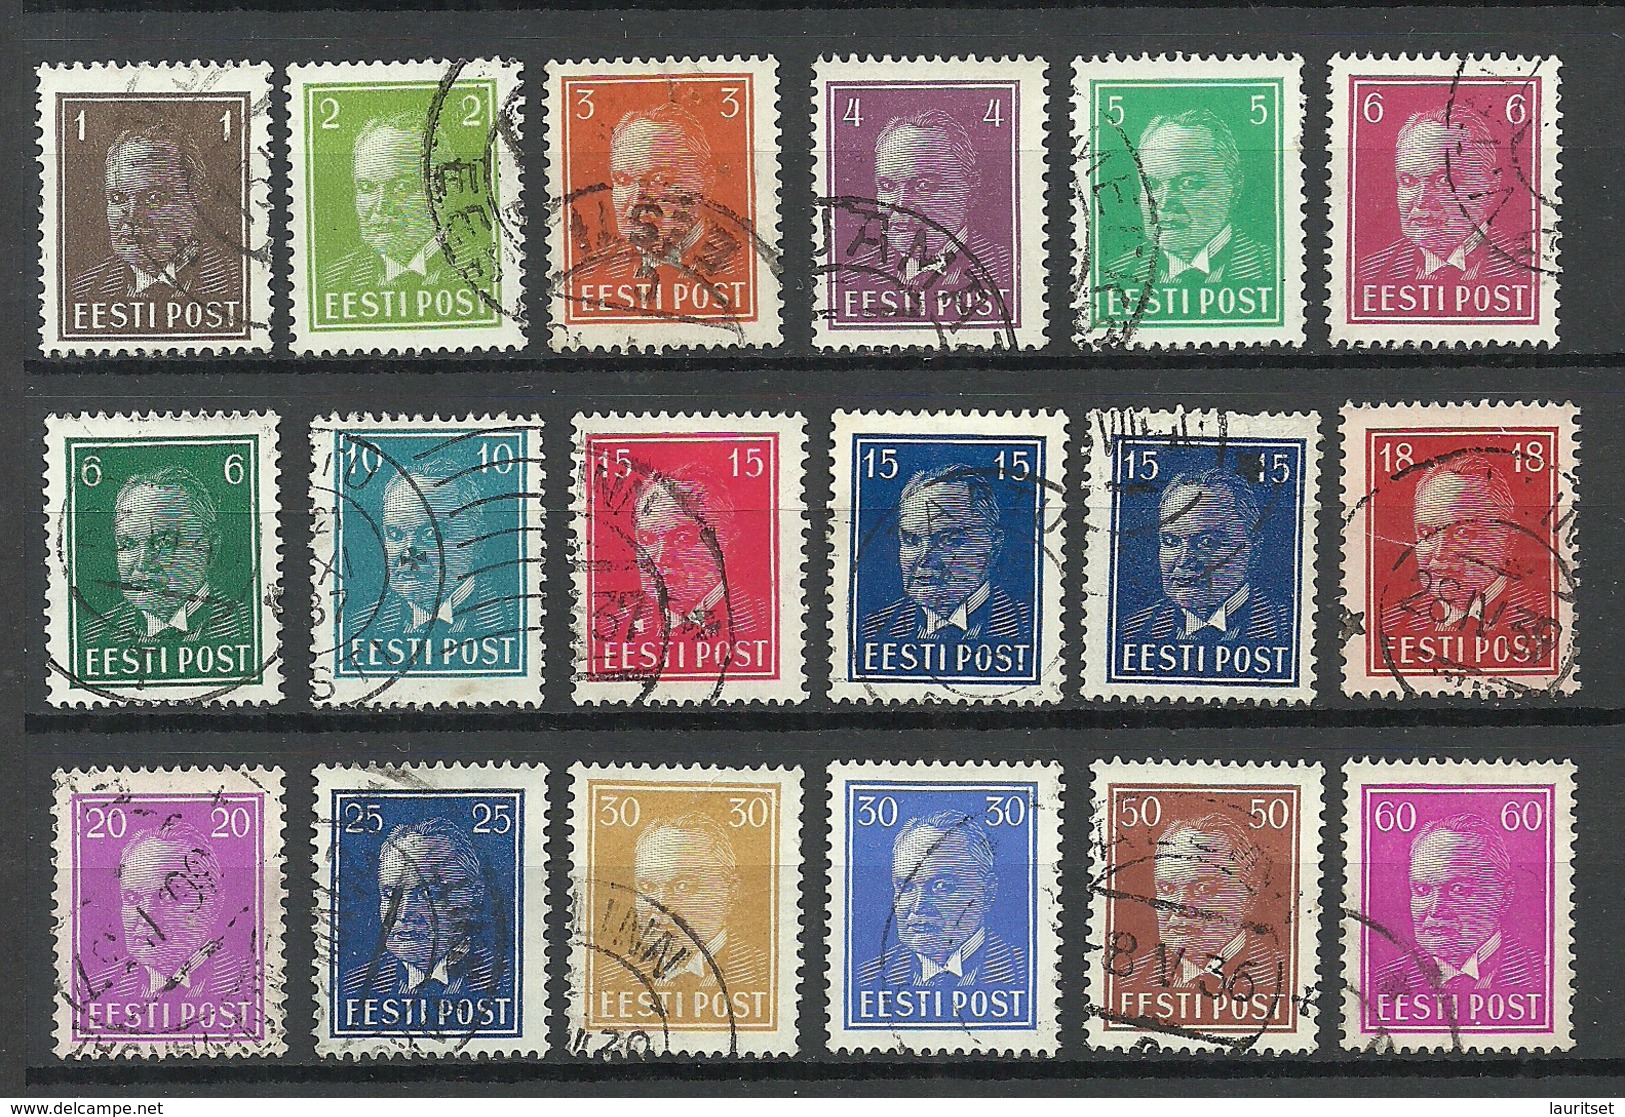 Estland Estonia 1936-1940 Präsident Päts Complete Set O - Estonia